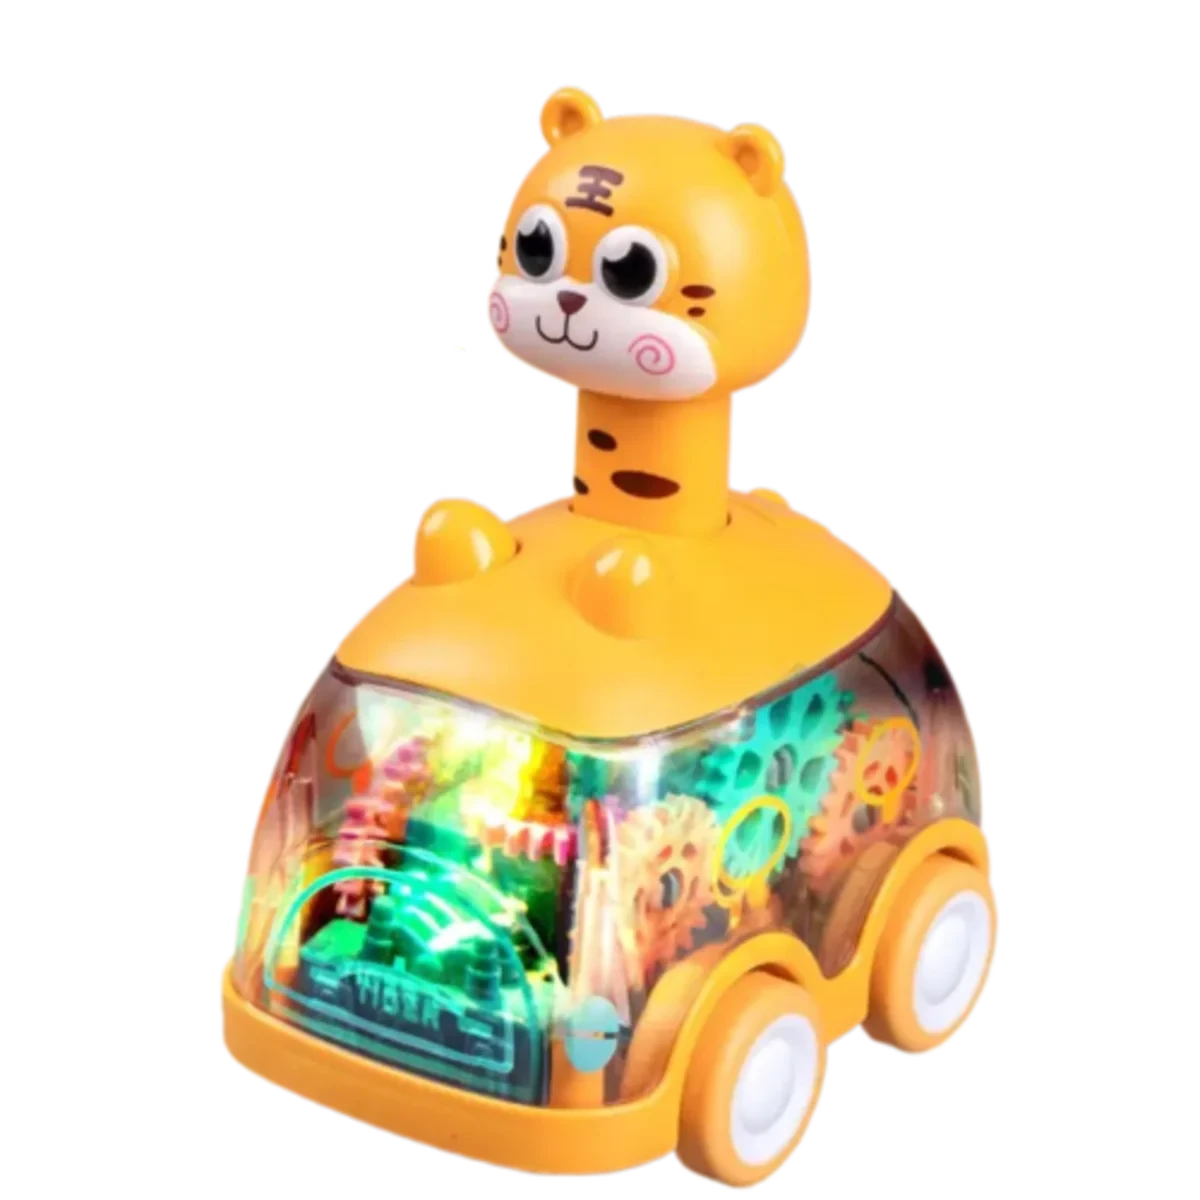 Press Gear Car Children's Toy Car - Fun Rotation & Soft Light